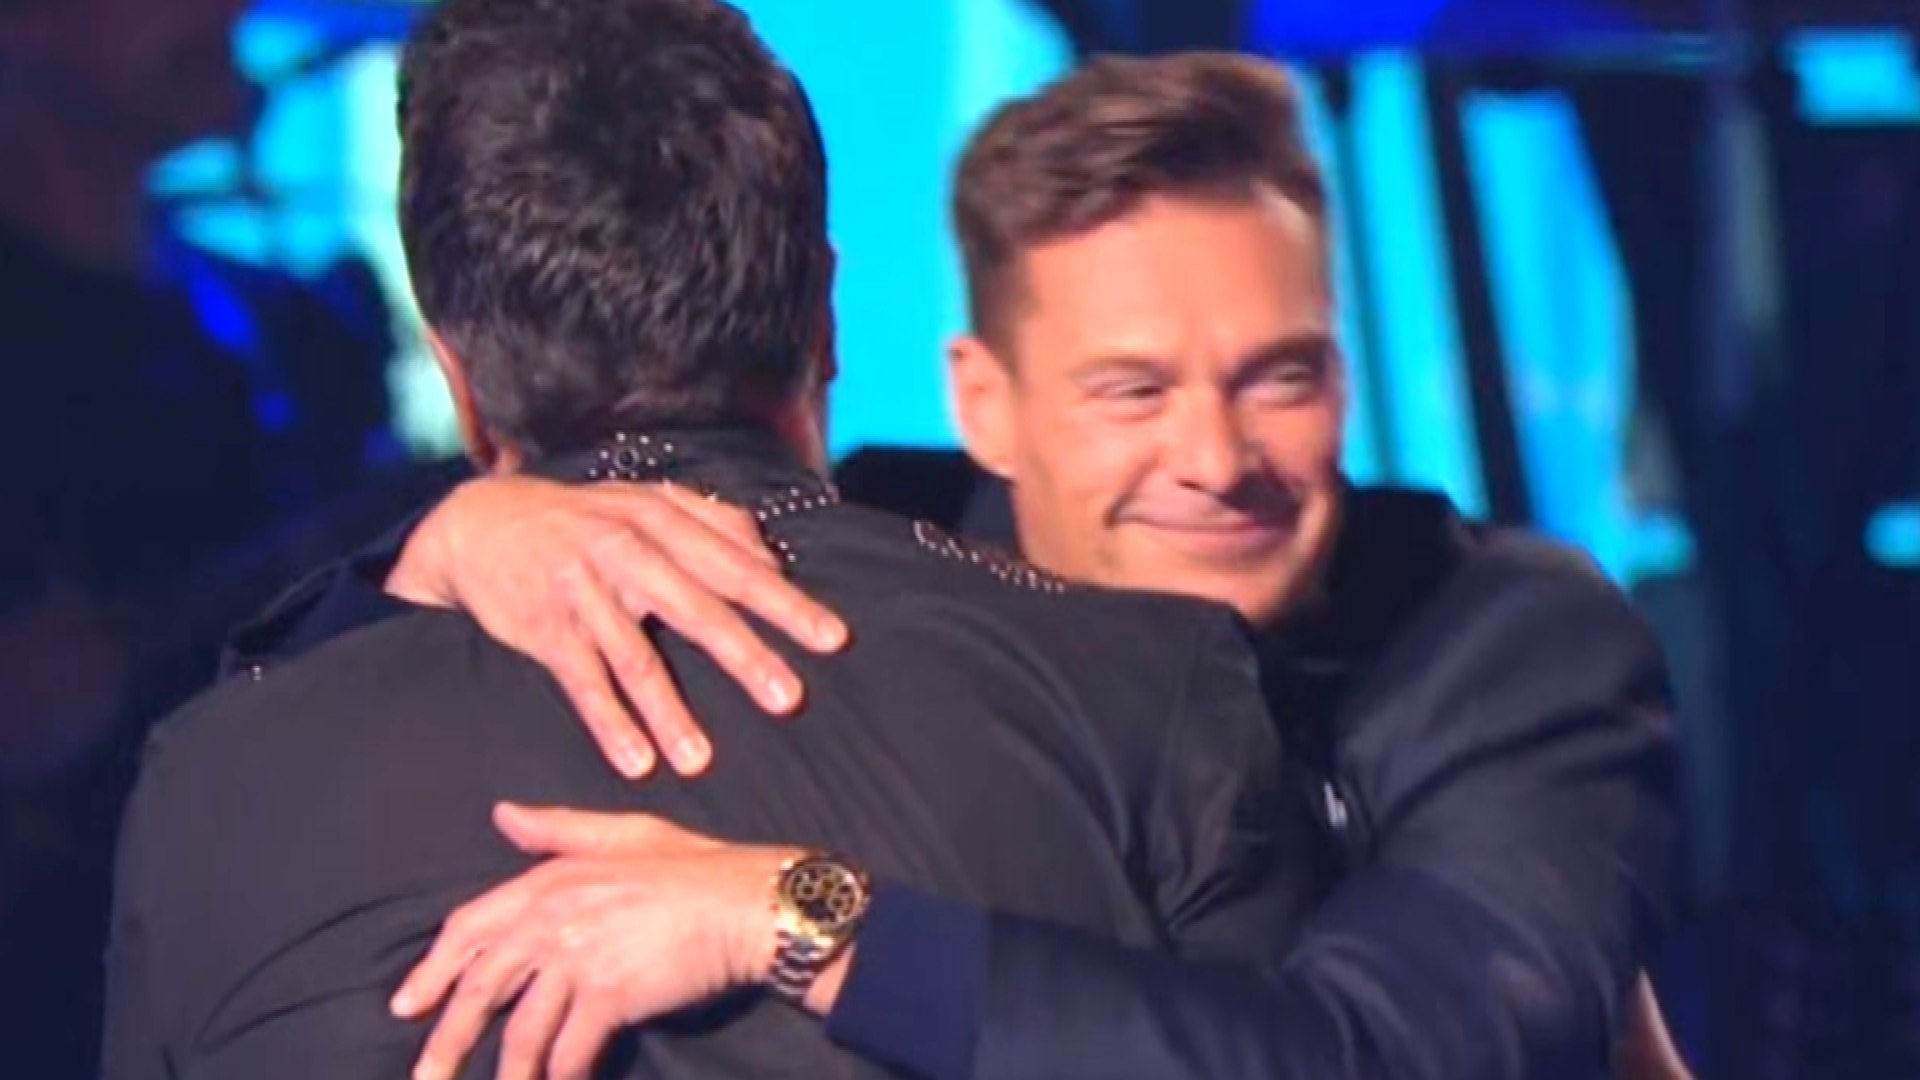  'American Idol': Watch Luke Bryan Comfort Ryan Seacrest After Emotional Performance